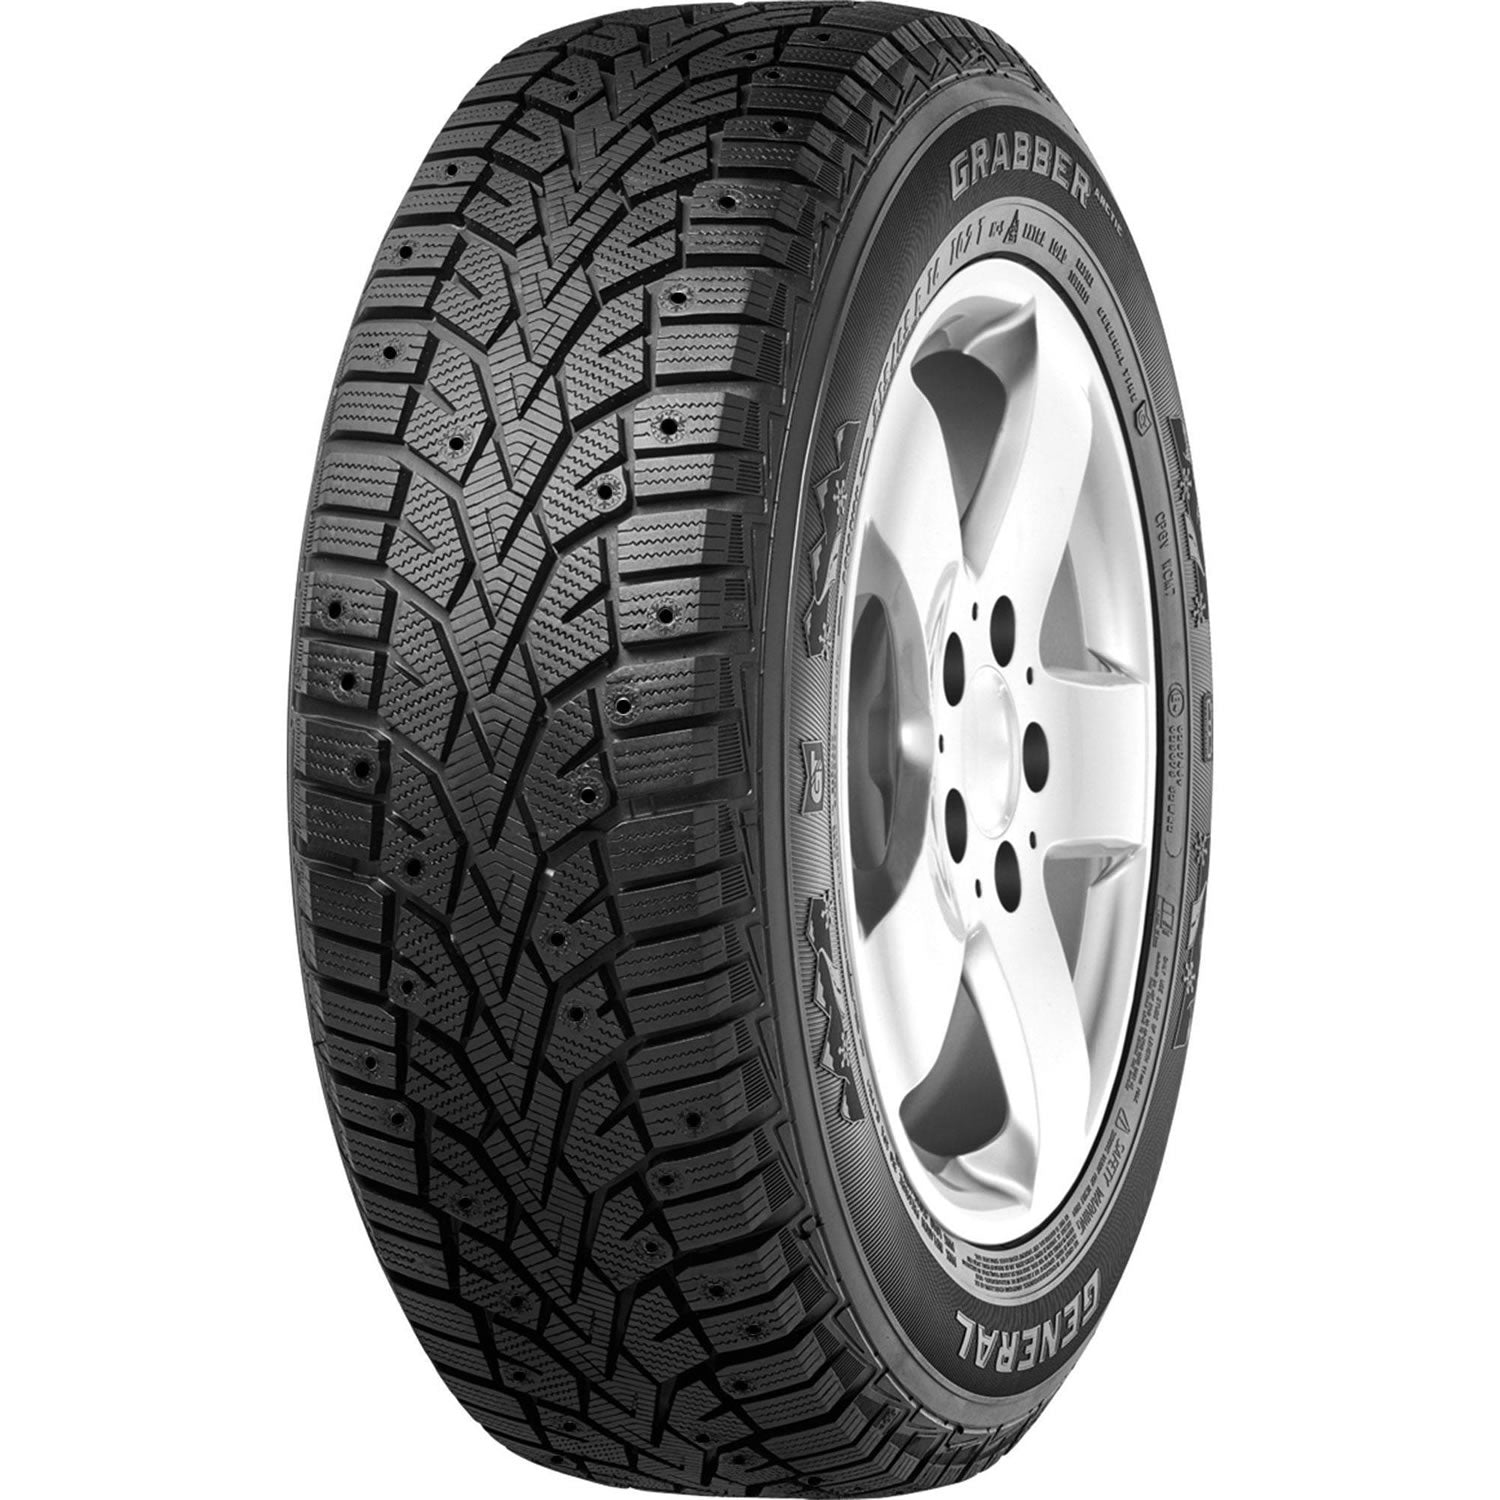 GENERAL GRABBER ARCTIC 265/65R18 (31.5X10.4R 18) Tires